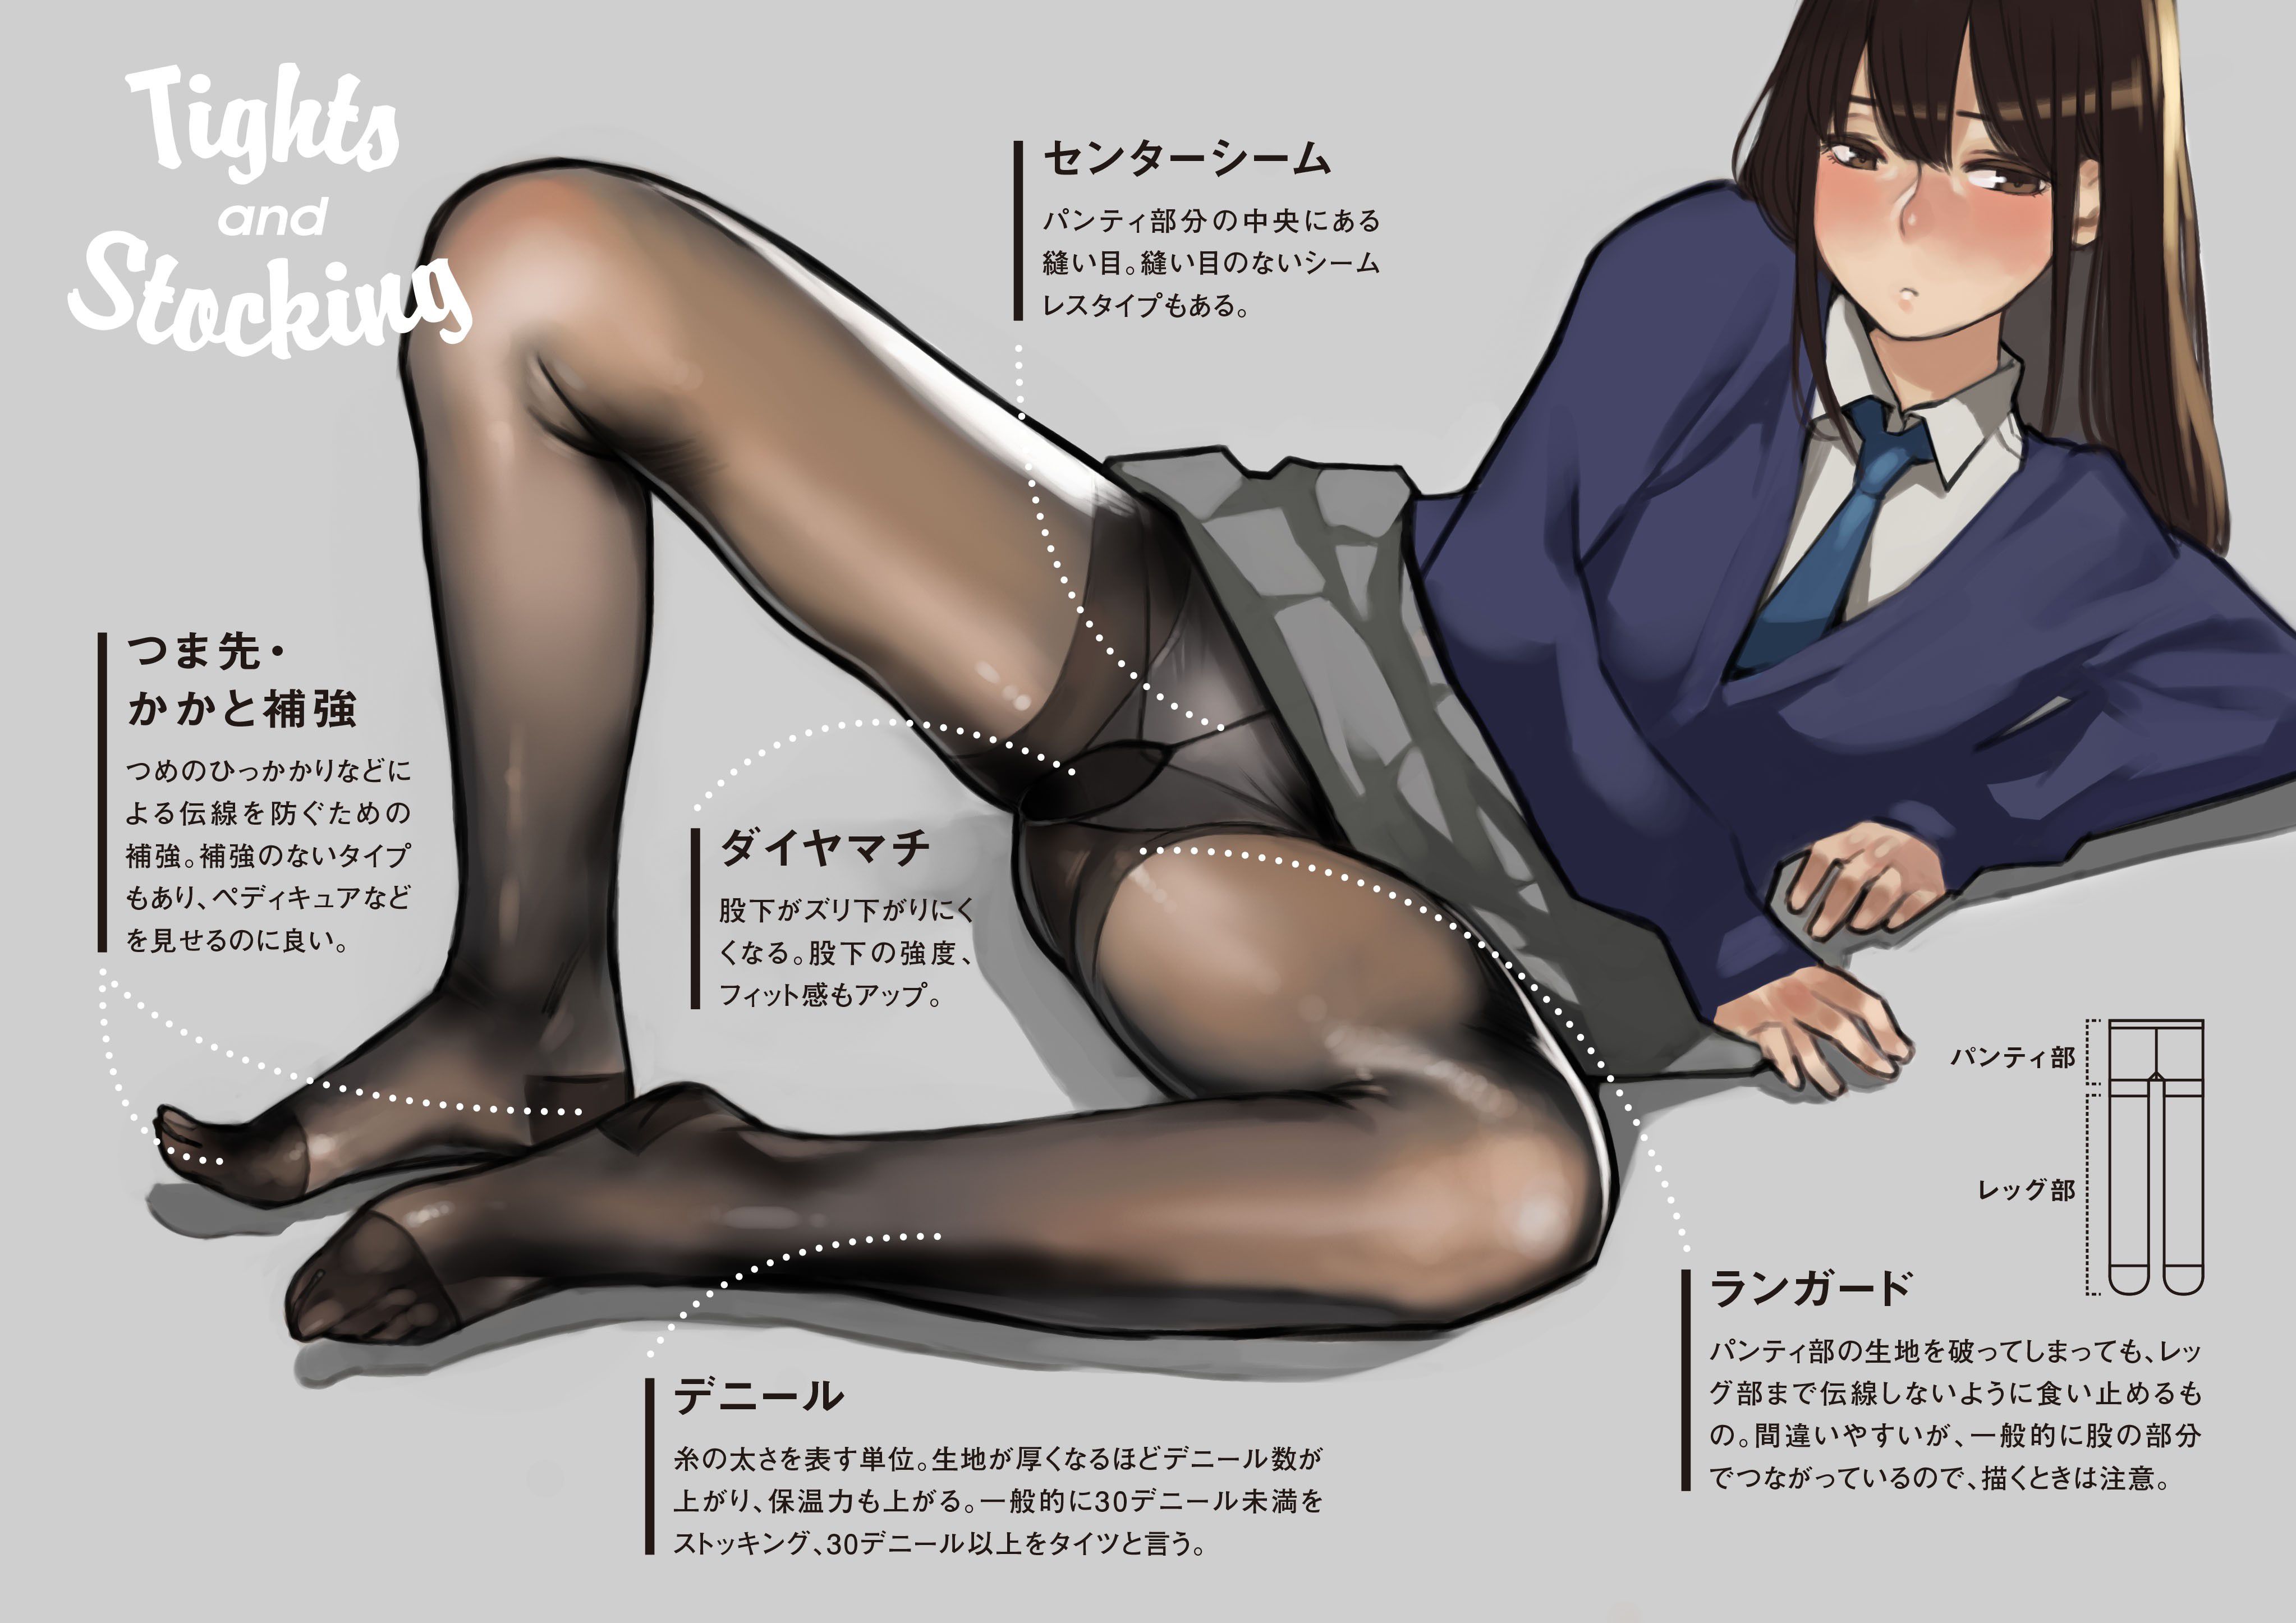 Schoolgirl's Uniform Secondary Micro Erotic Image Summary Part 4 13